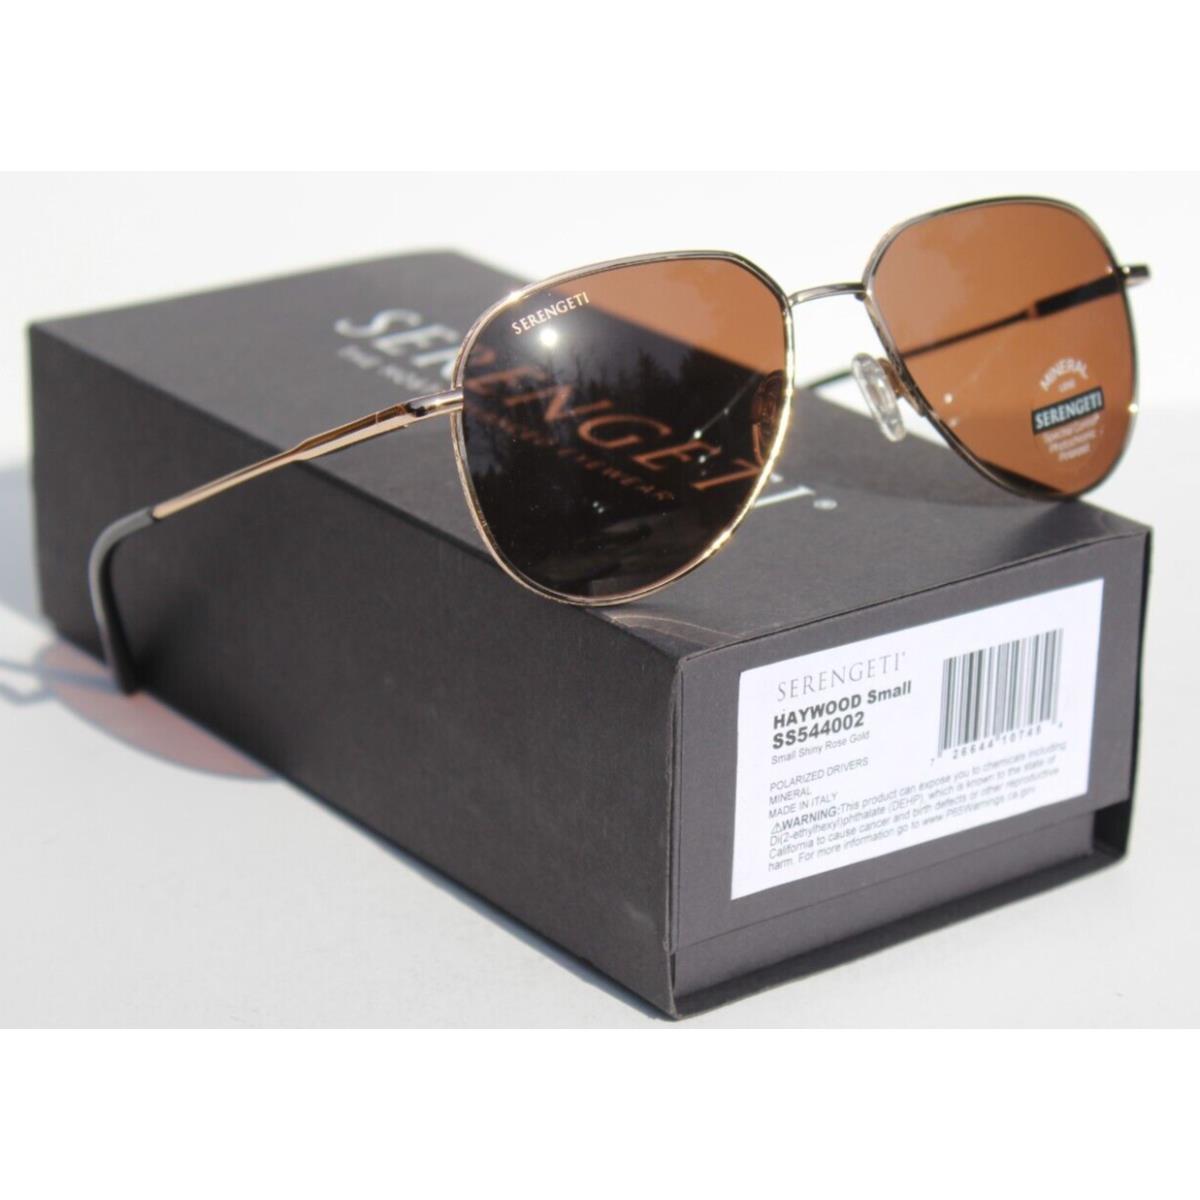 Serengeti Haywood Small Polarized Sunglasses Rose Gold/drivers Gold SS544002